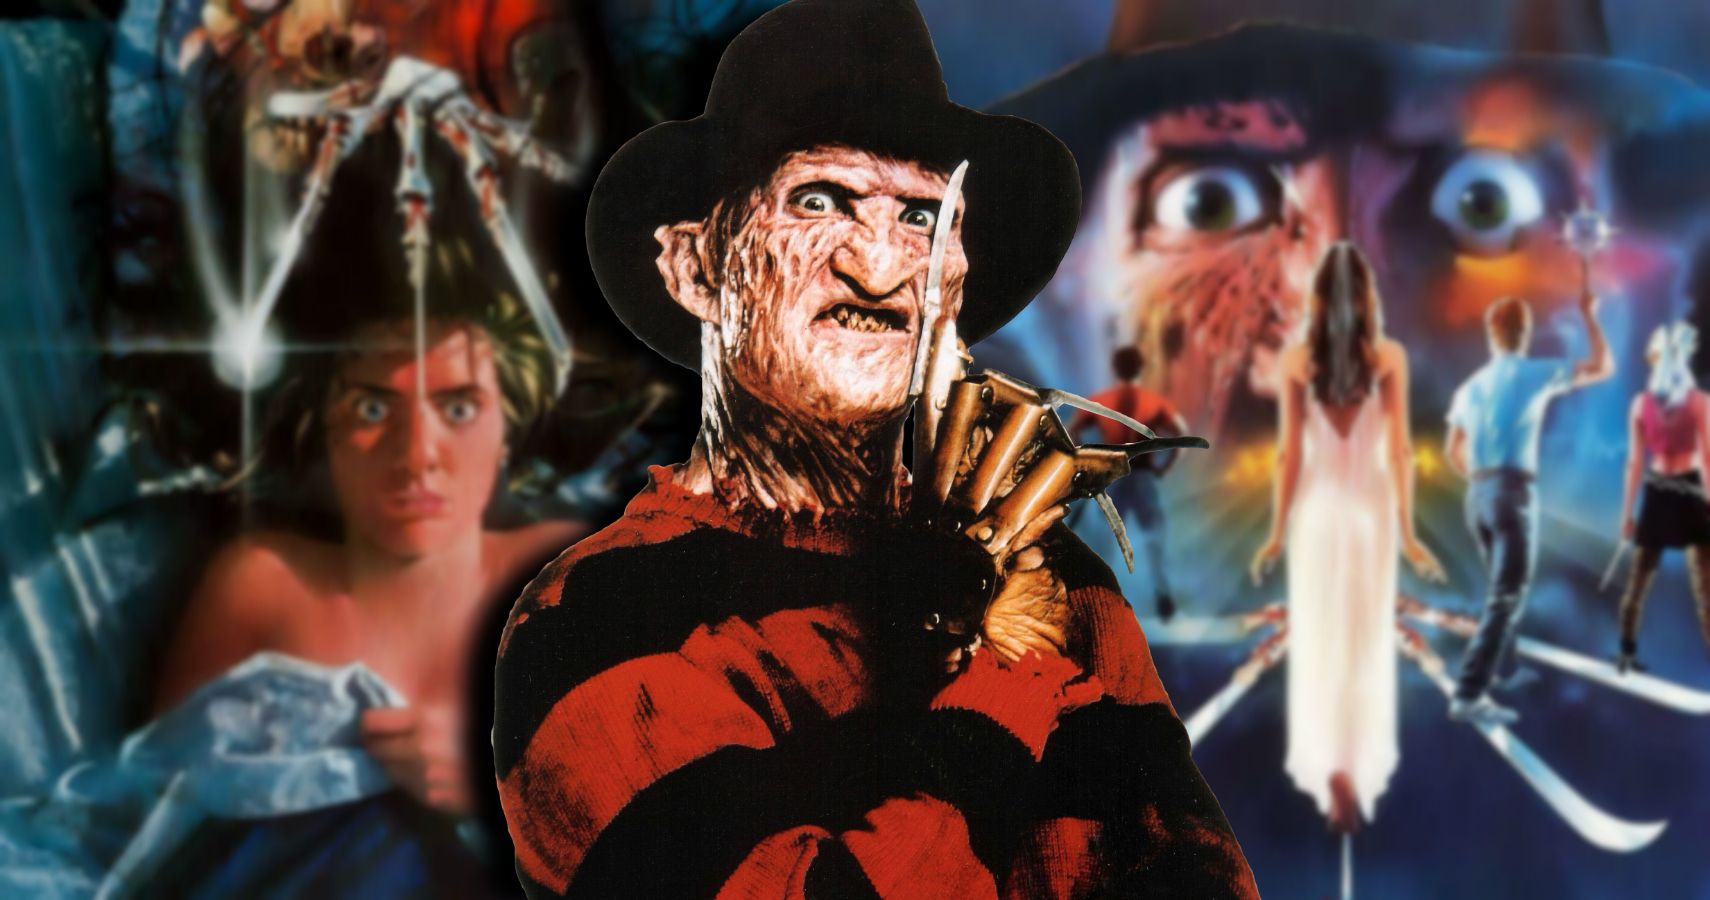 Freddy's Dead: The Final Nightmare - Metacritic